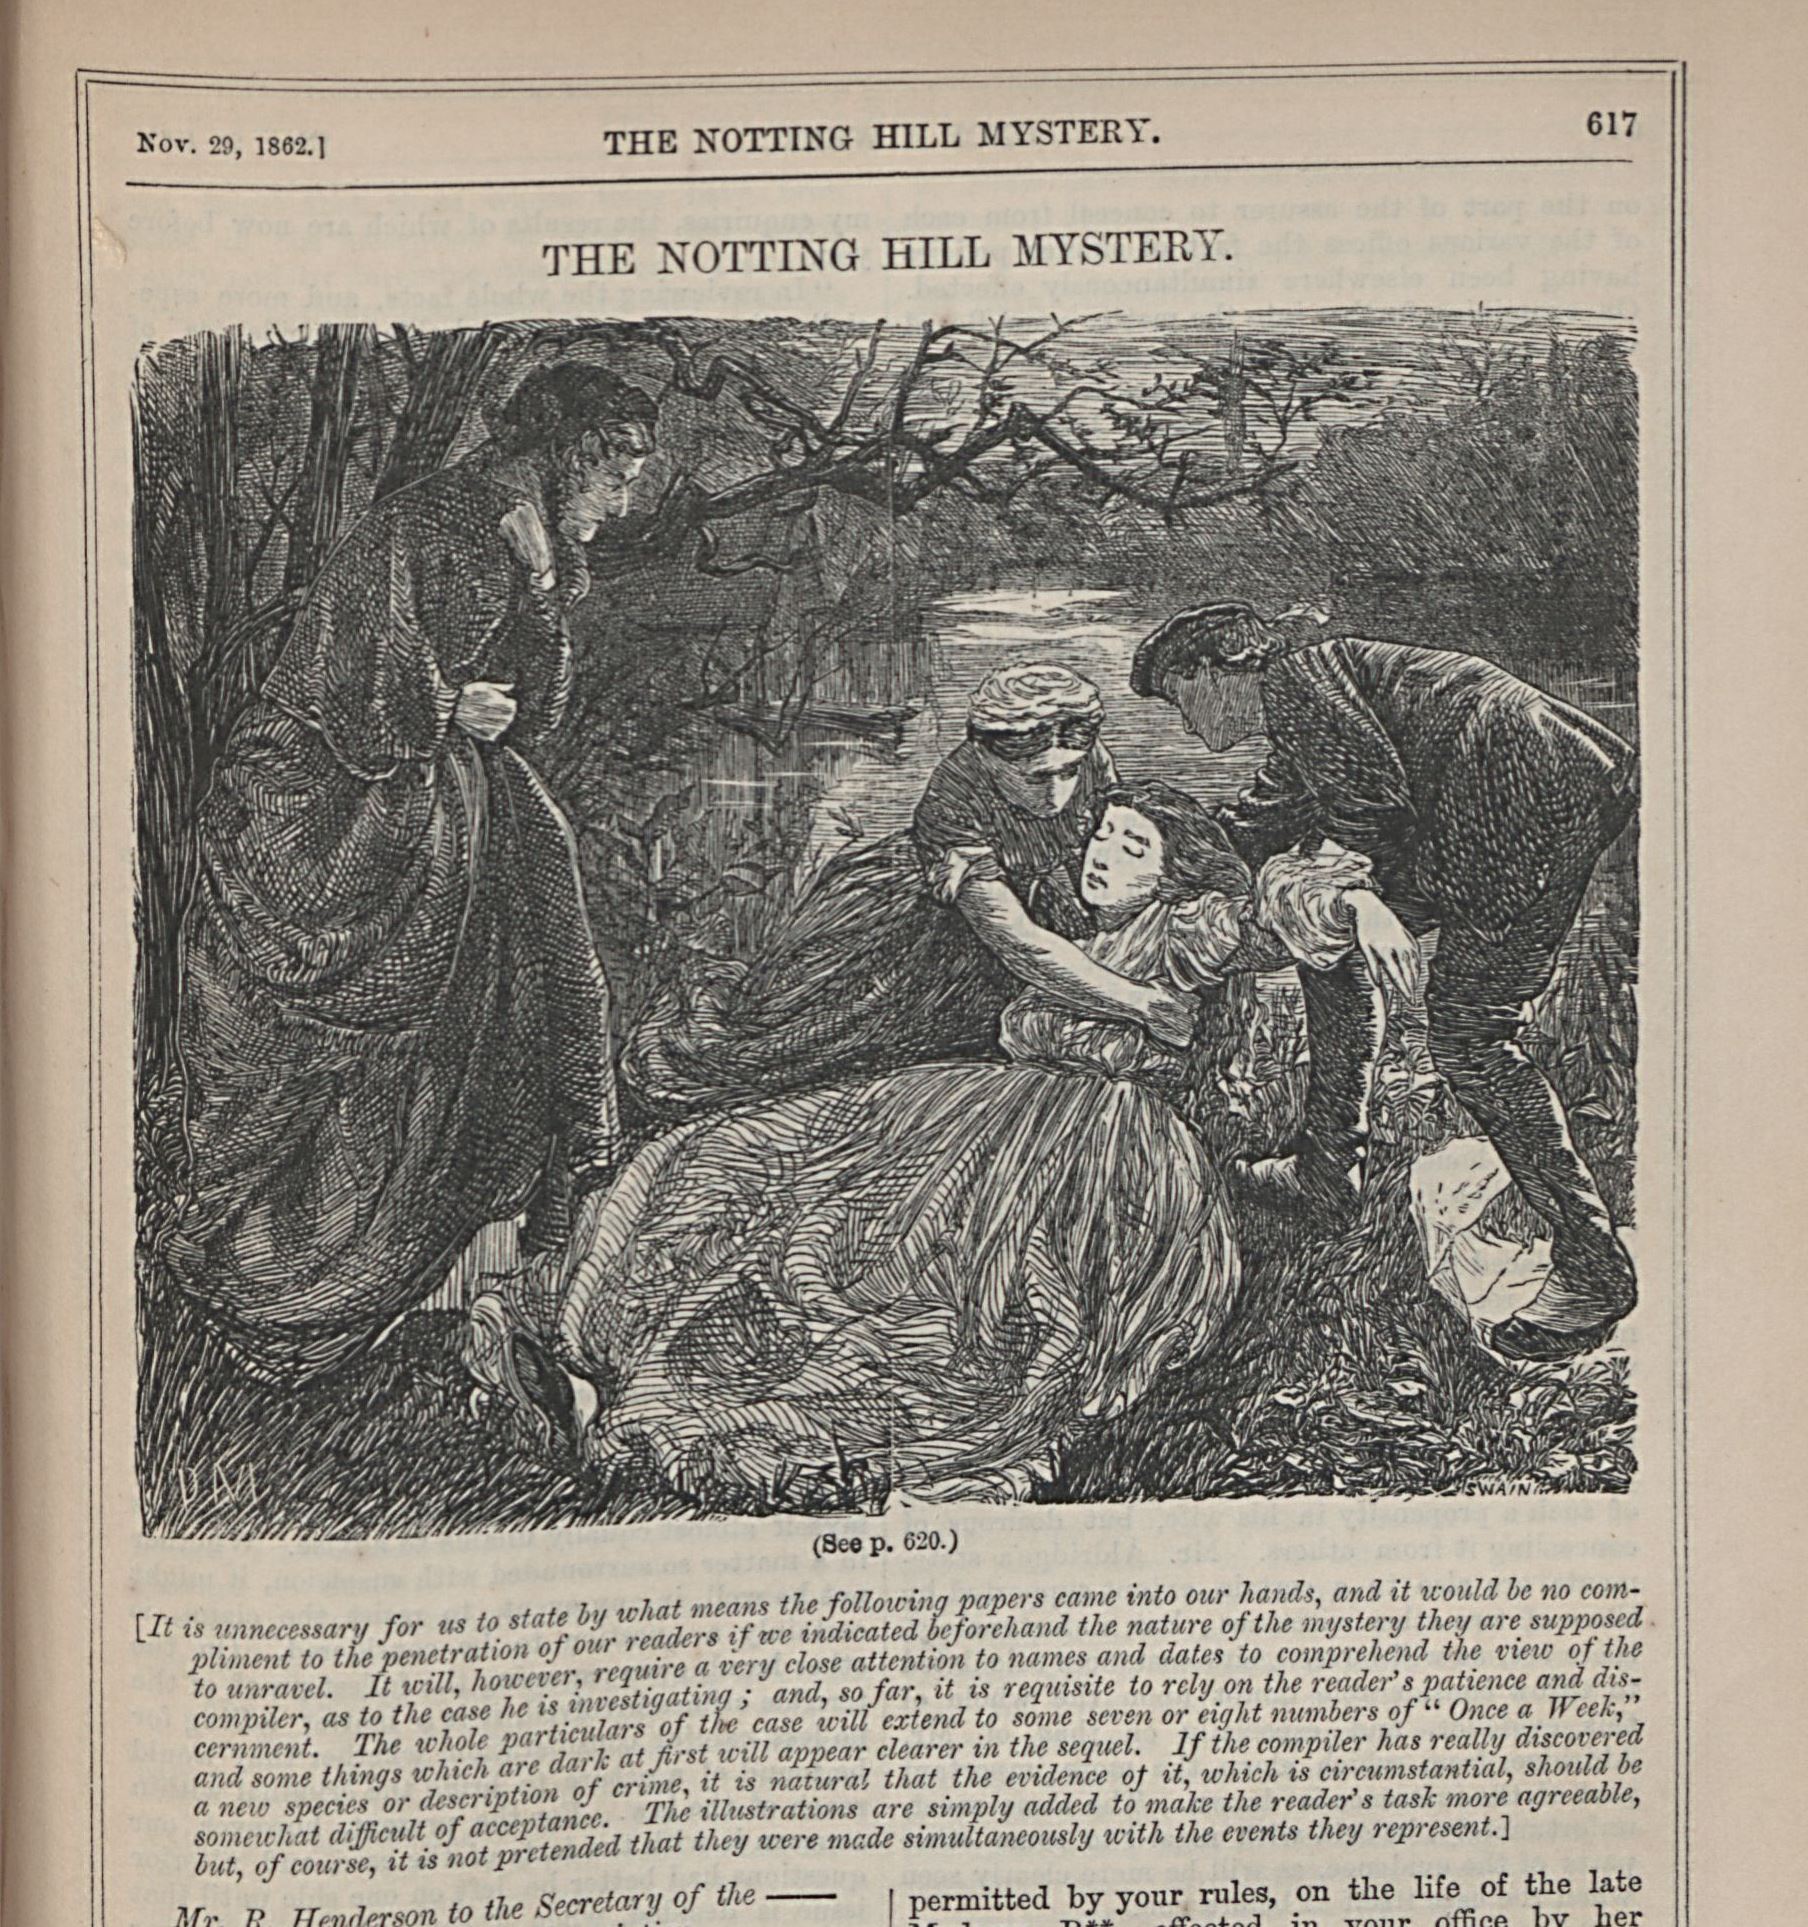 http://blogs.princeton.edu/rarebooks/images/1862.Nov.29.jpg